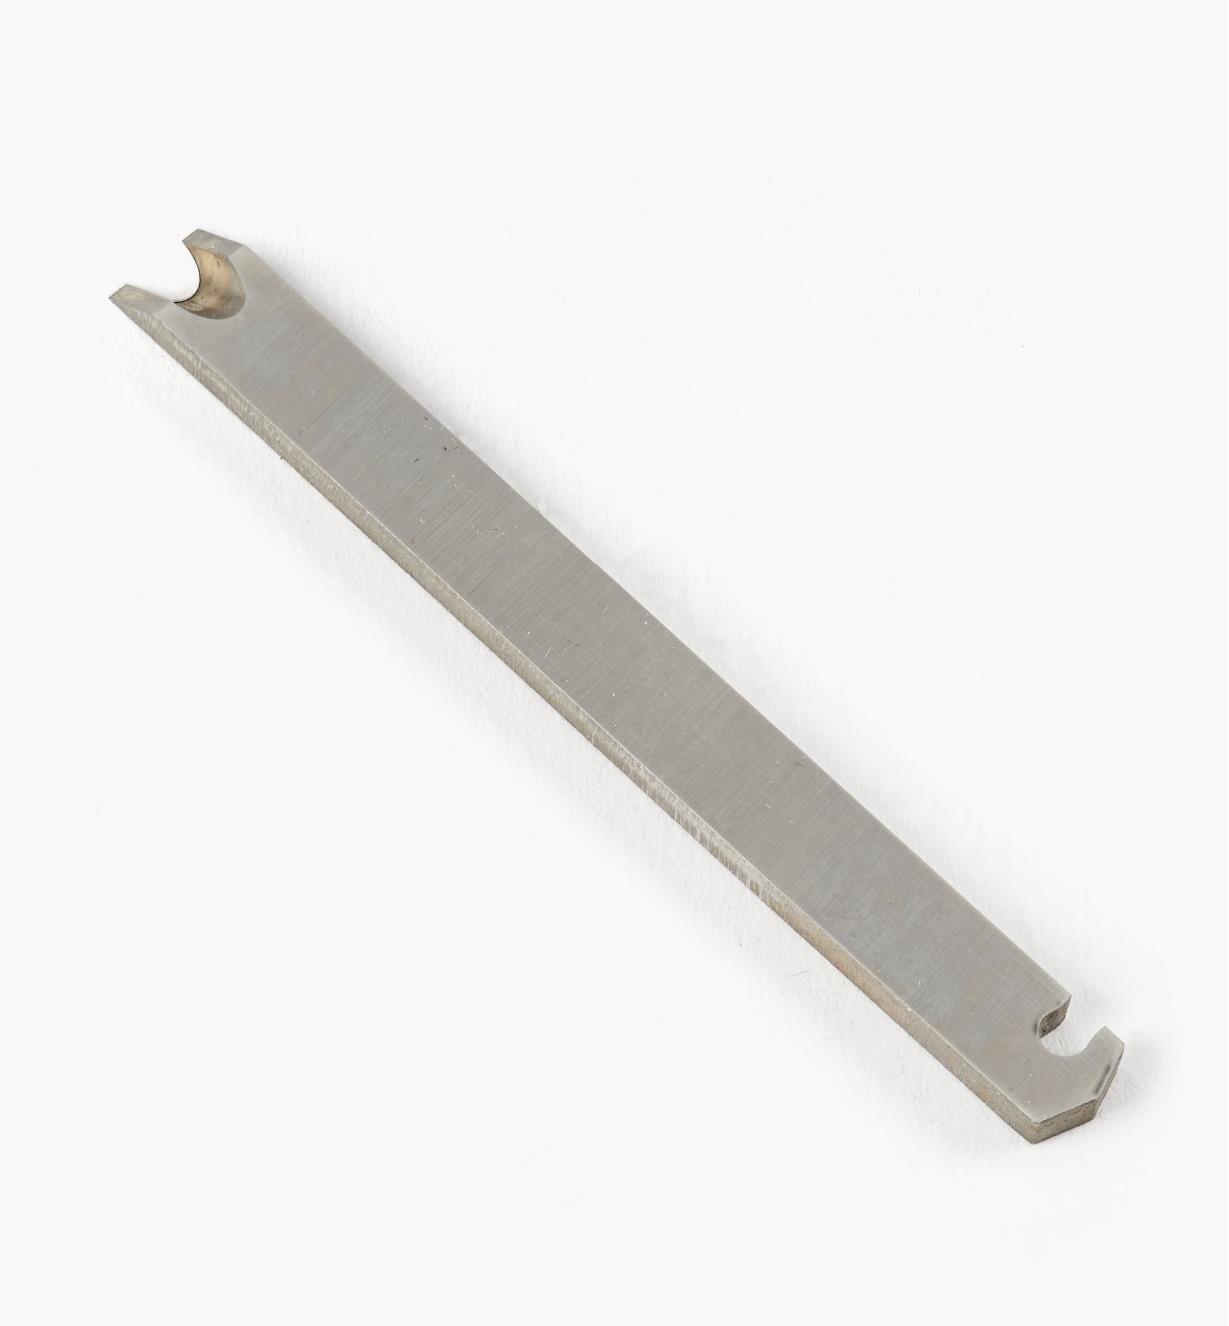 05P5277 - 3/16" Small Left-Hand Beading Blade